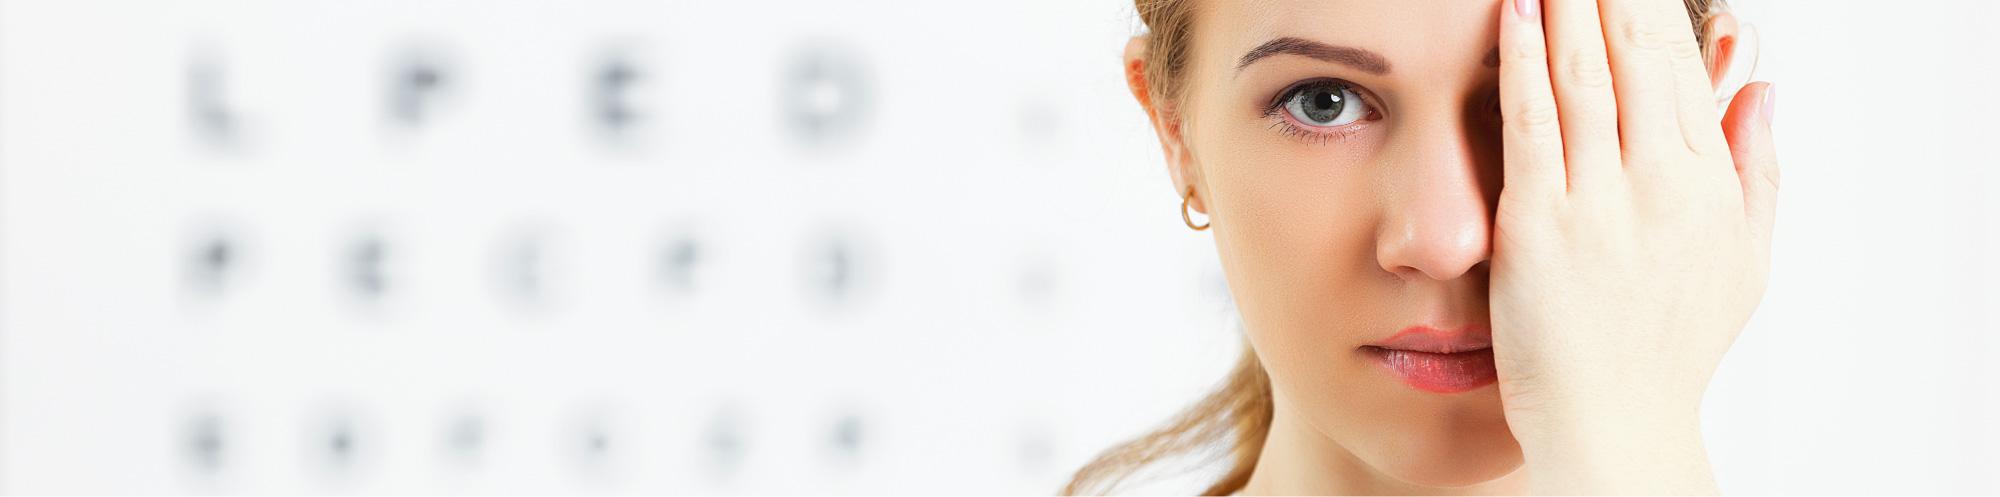 Plusoptix Vison Screener - Augenarztpraxis Buchen